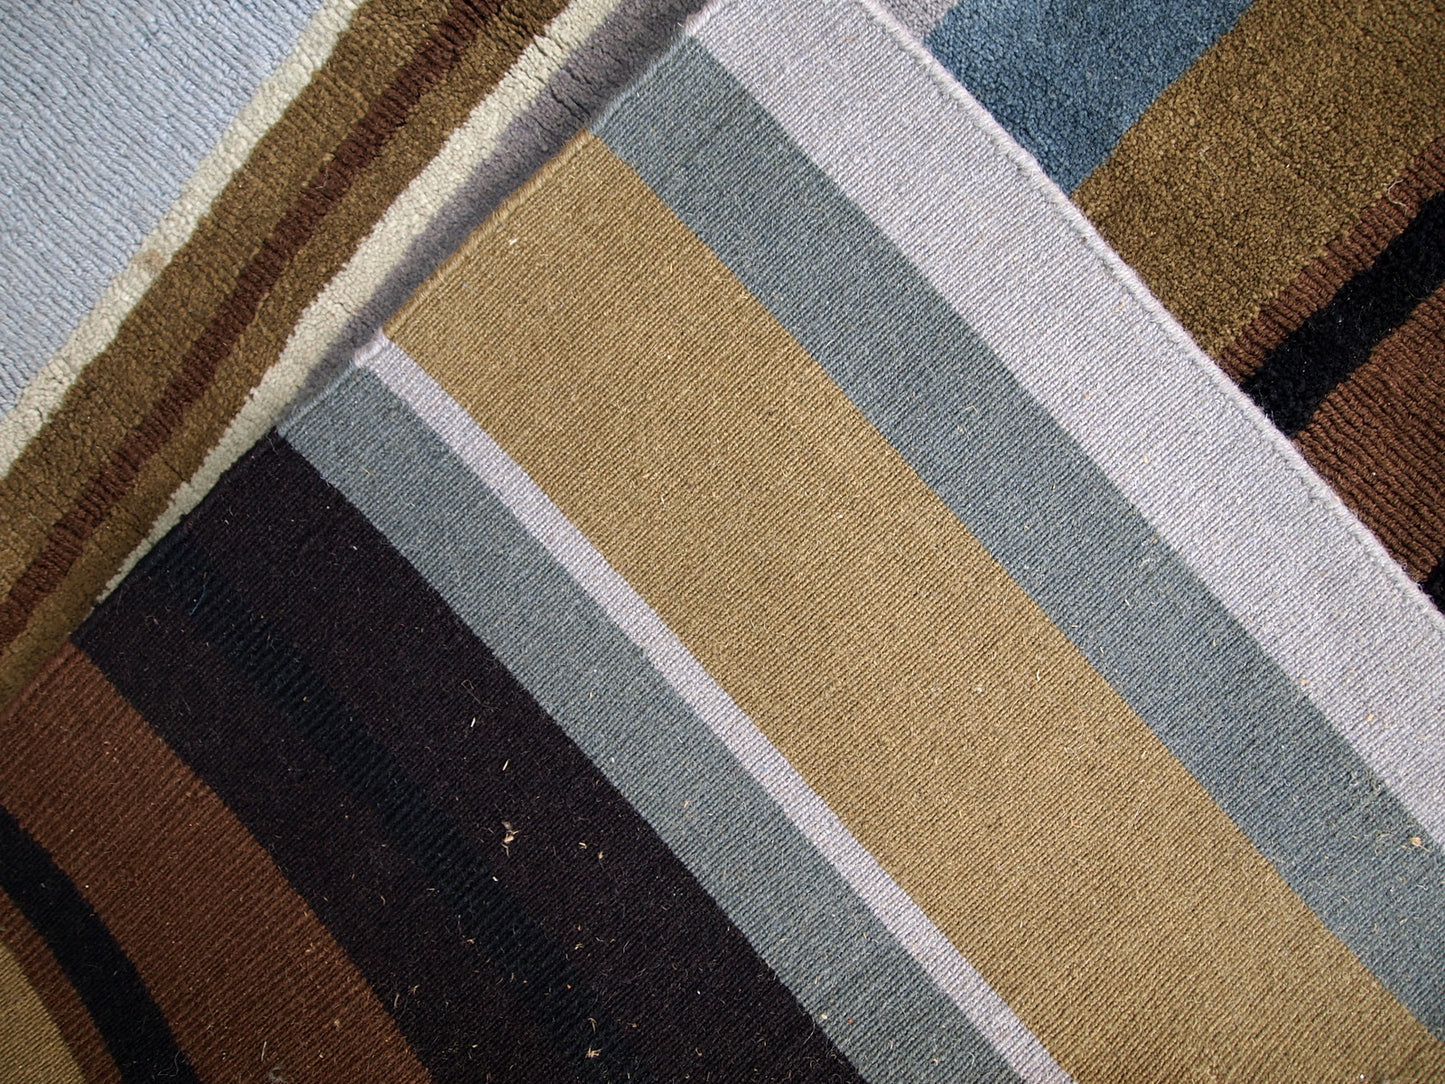 Handmade vintage Indian Modern rug, 1980s